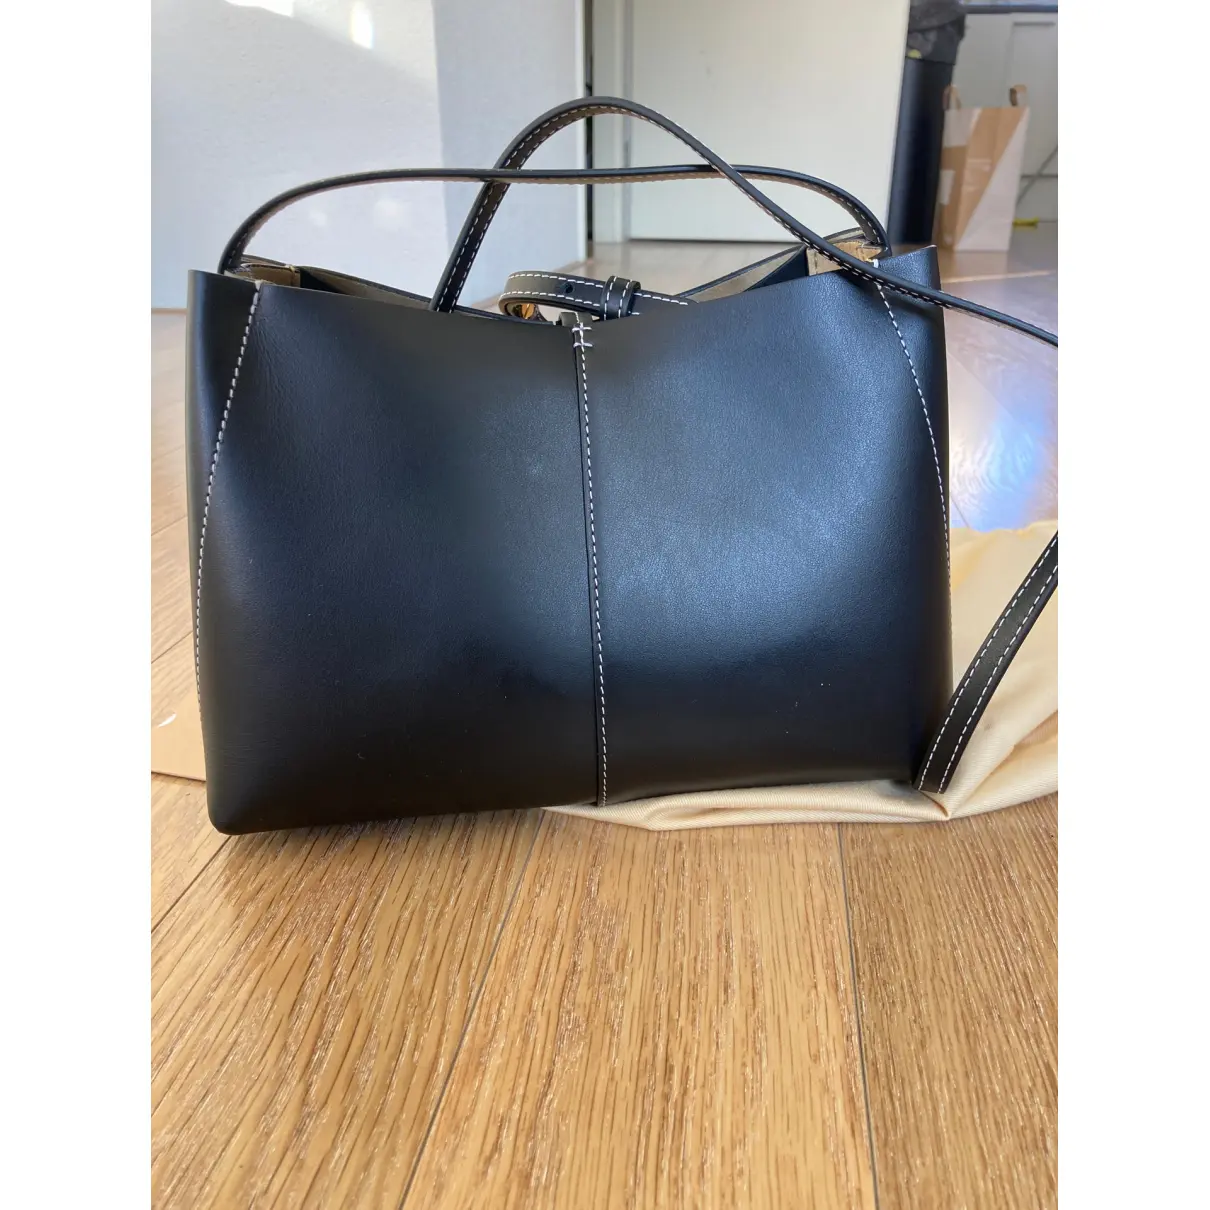 Buy Wandler Ava Tote Medium leather handbag online